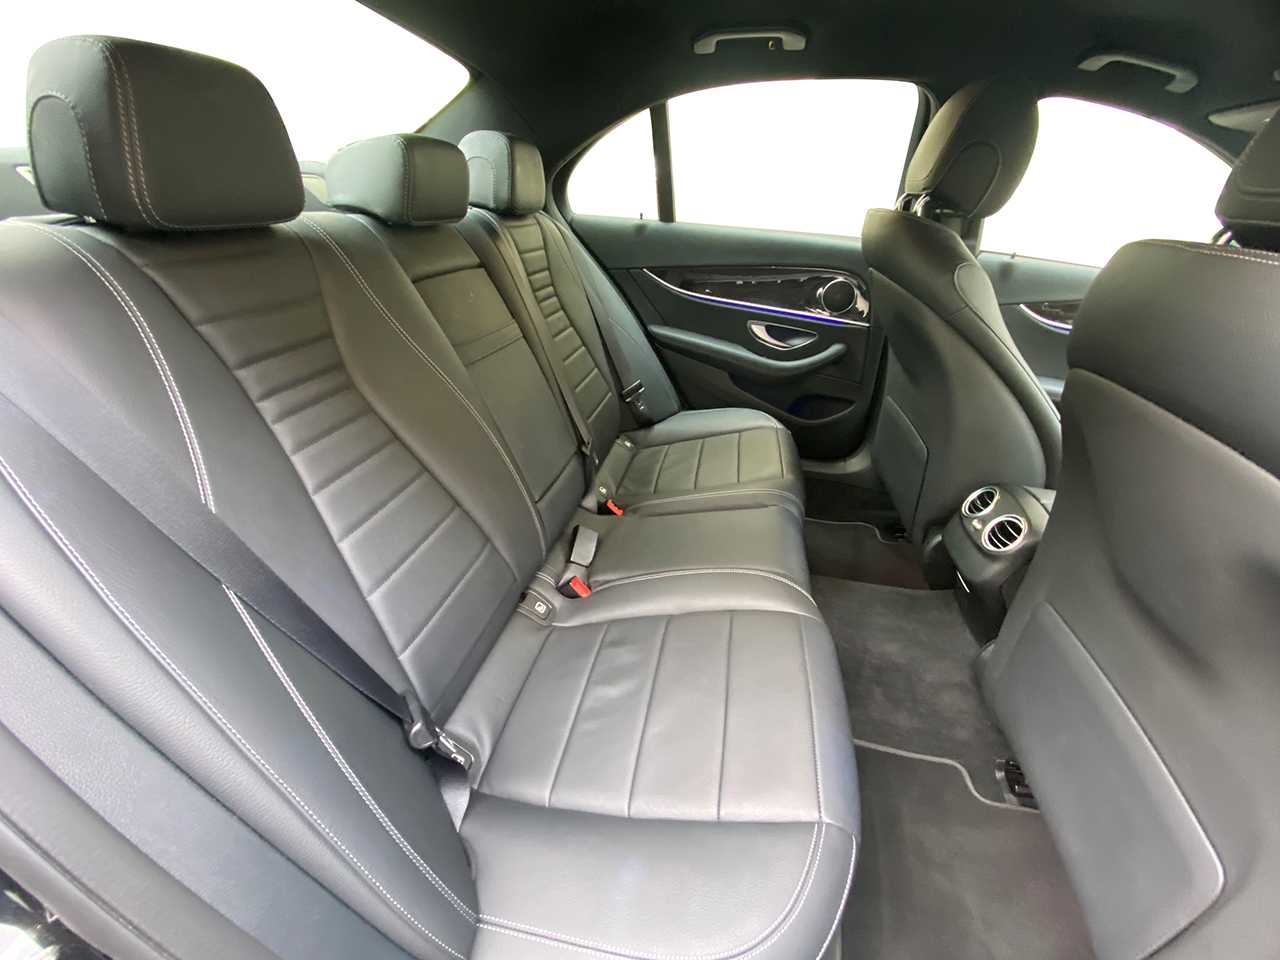 Mercedes benz E-Class back seats view